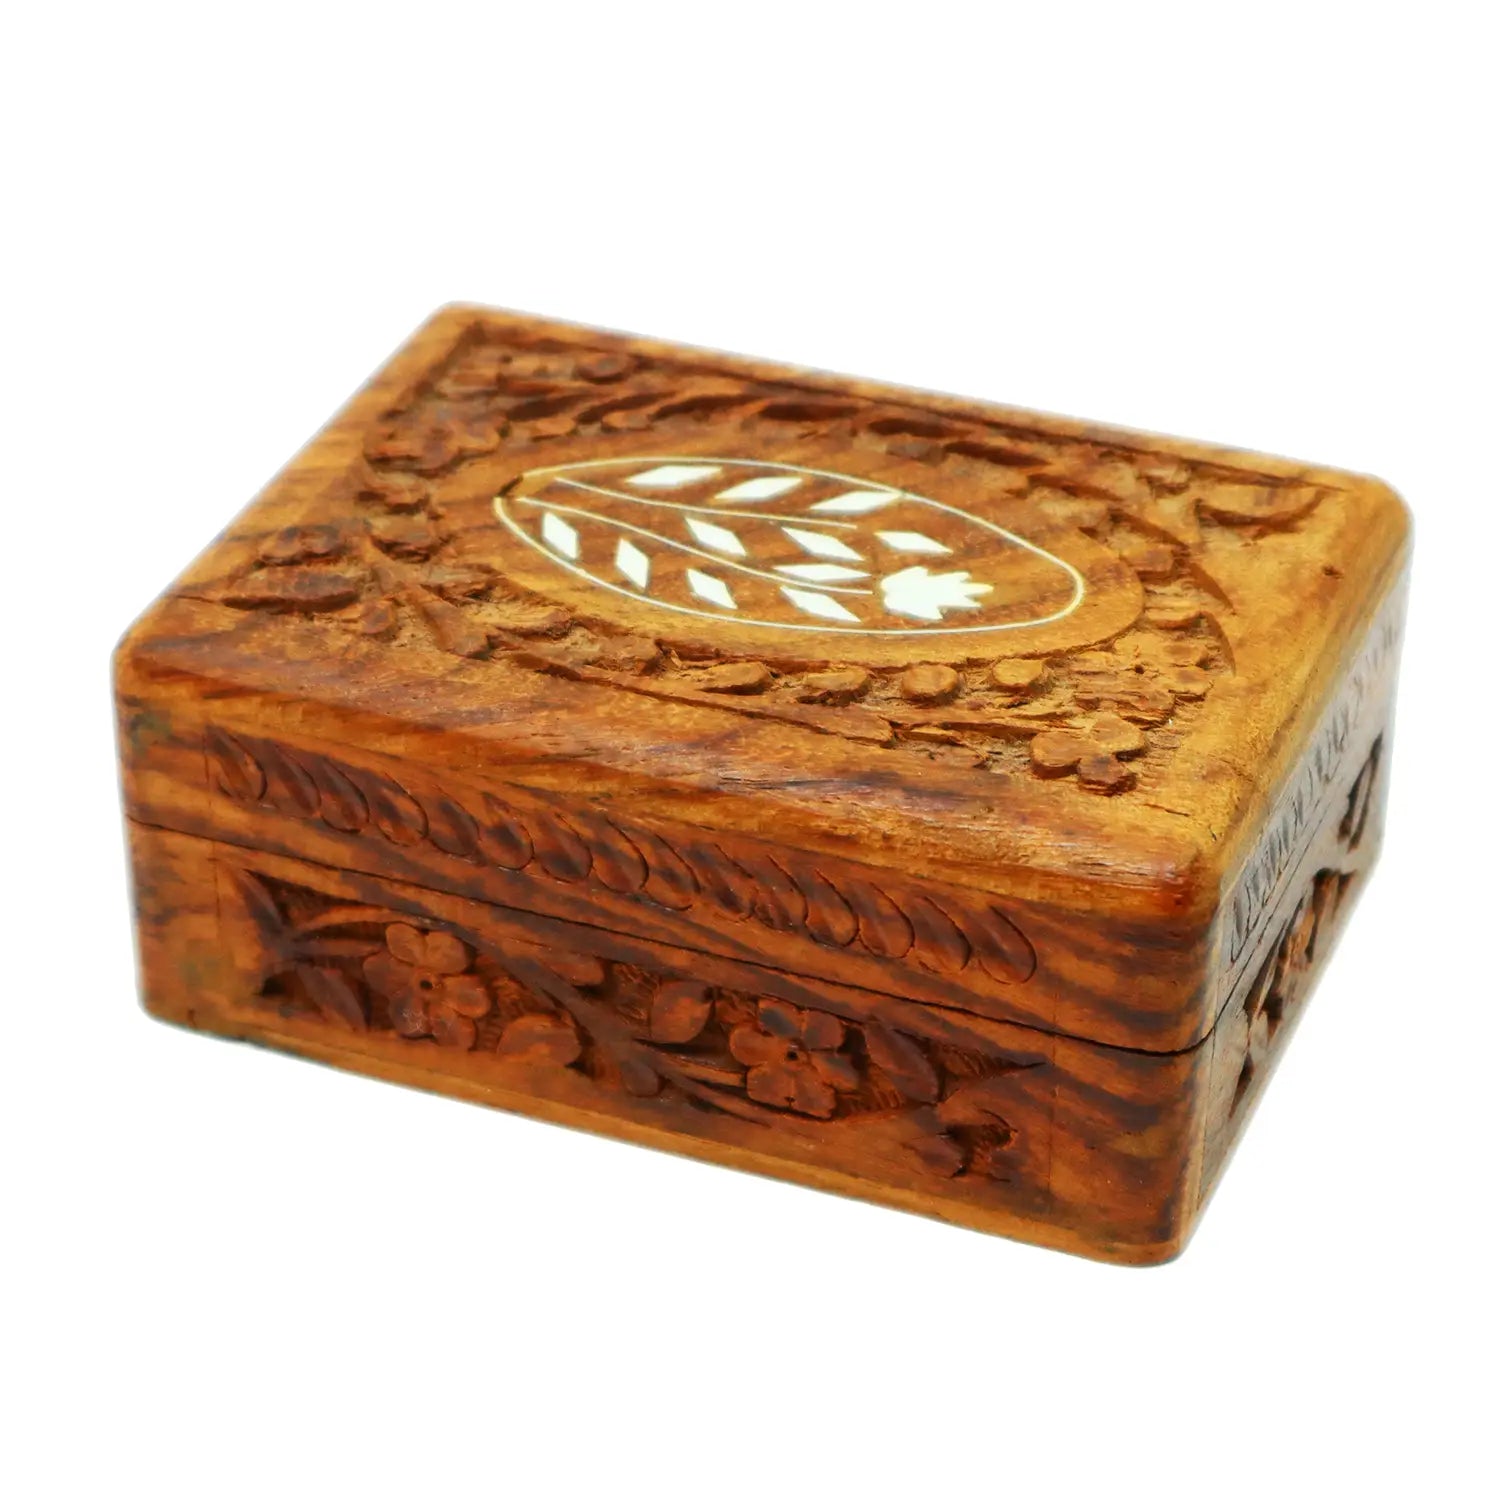 Antique Primitive Handcarved Hardwood Jewelry Box w/ Carved Floral Designs